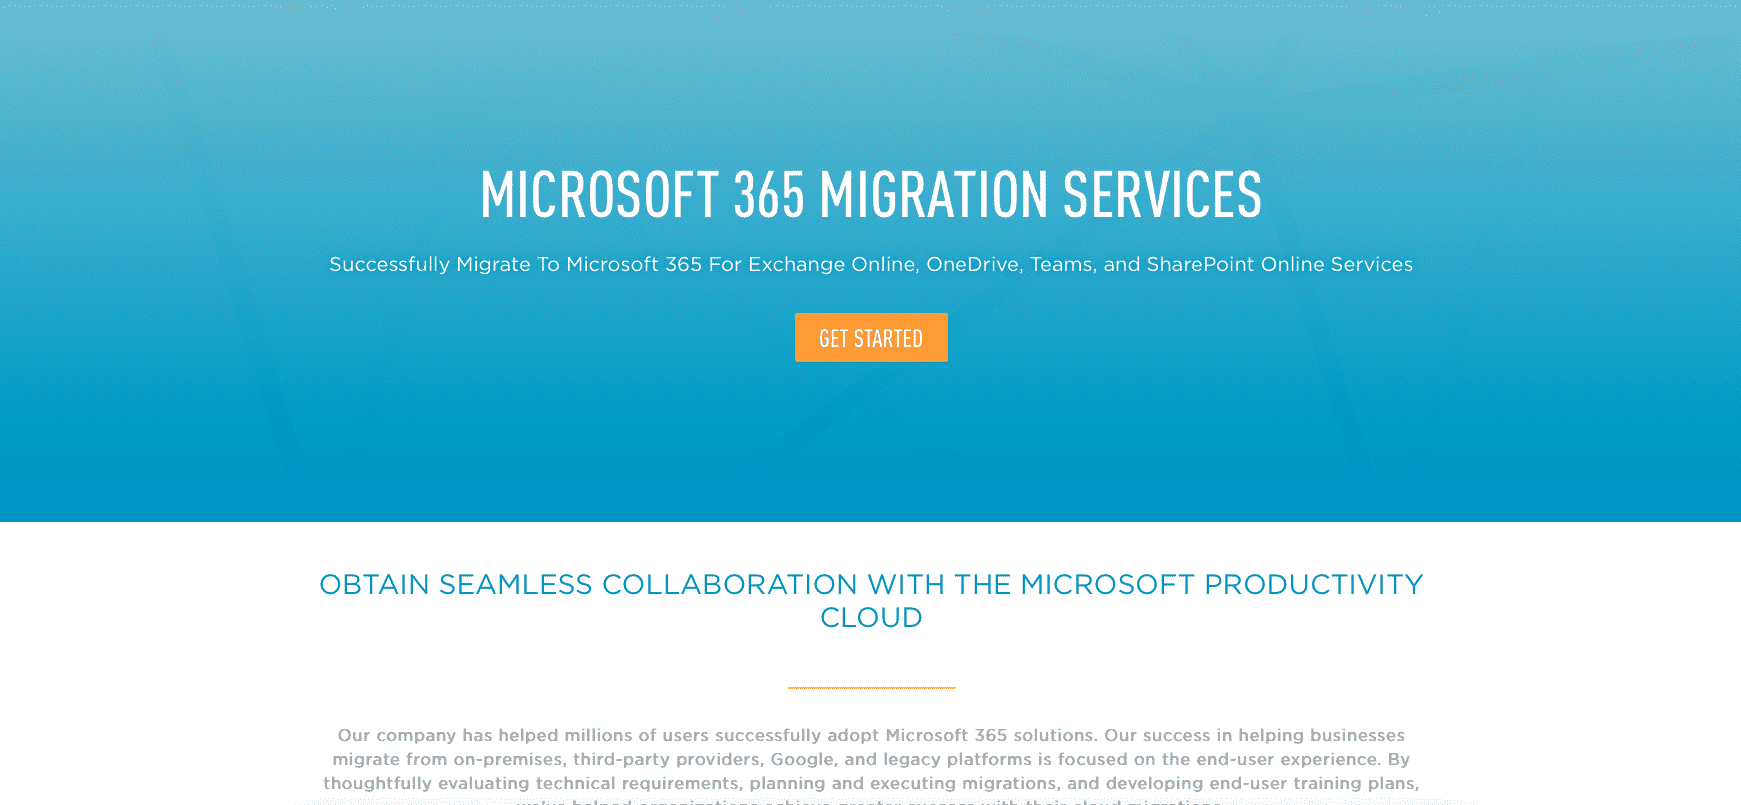 Microsoft 365, Information Services